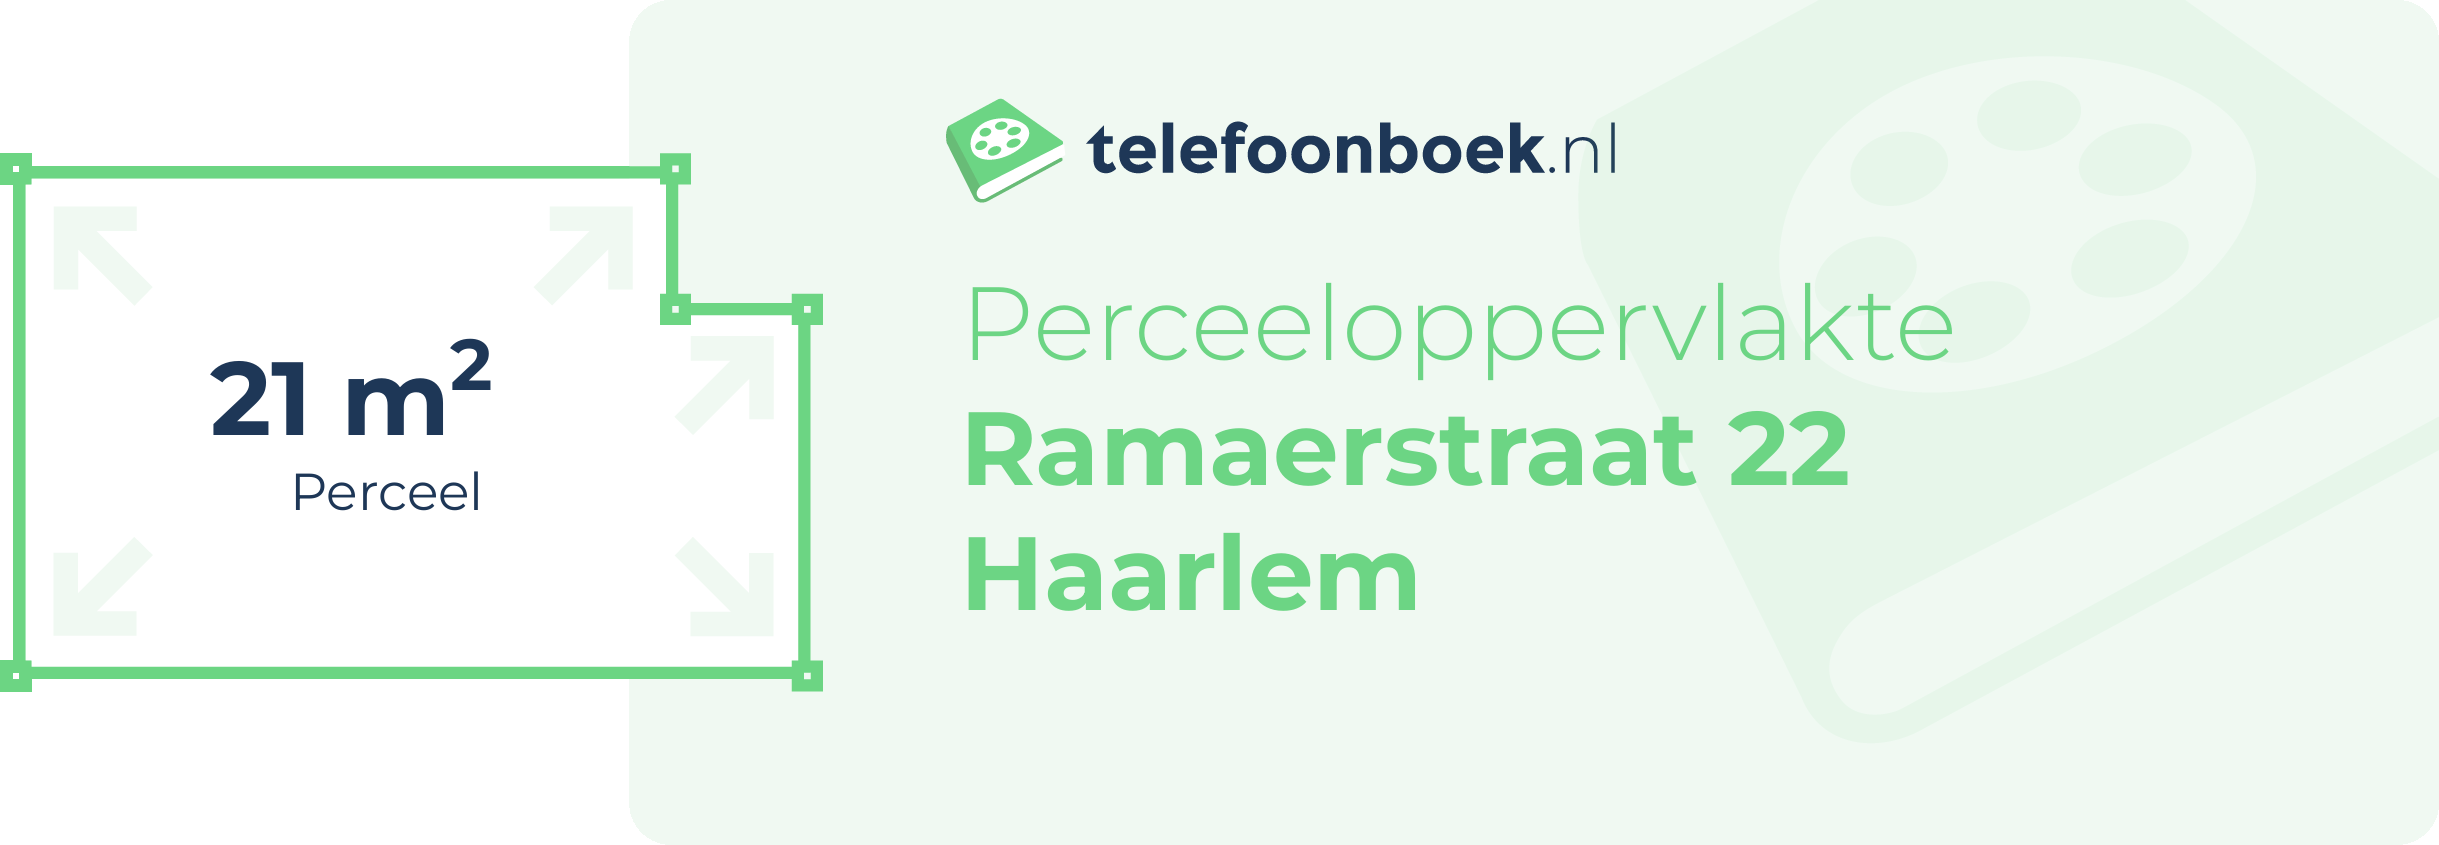 Perceeloppervlakte Ramaerstraat 22 Haarlem